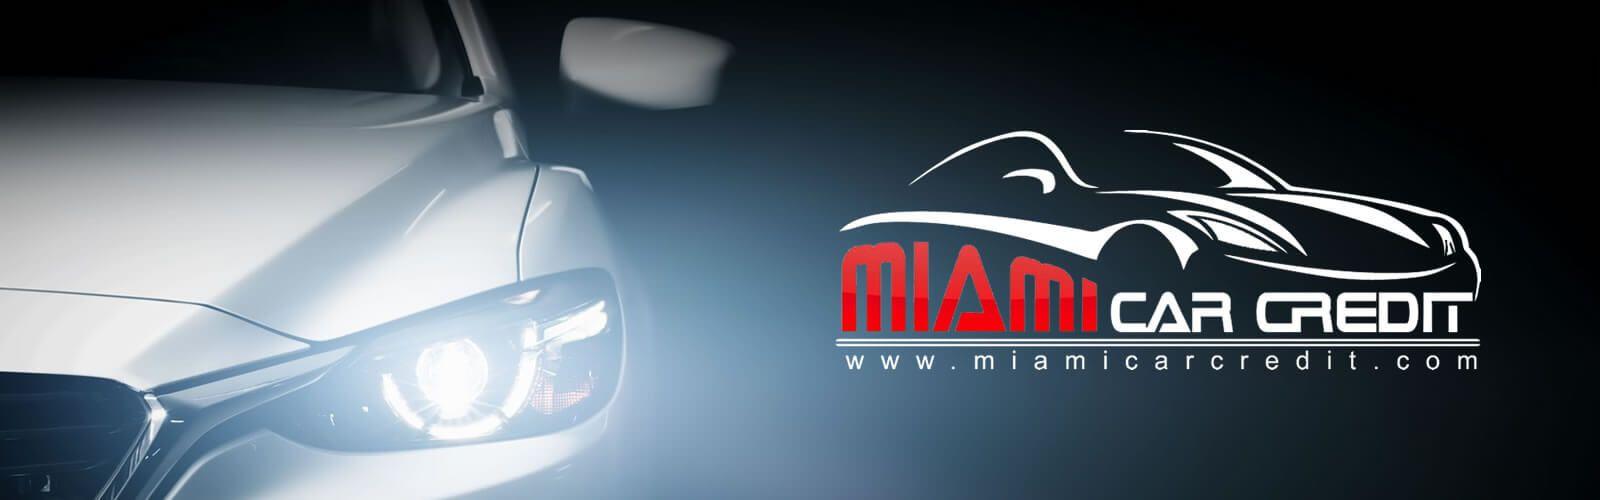 Used Car Dealership Logo - Miami Car Credit - Used Car Dealer Miami Gardens, FL | Auto ...